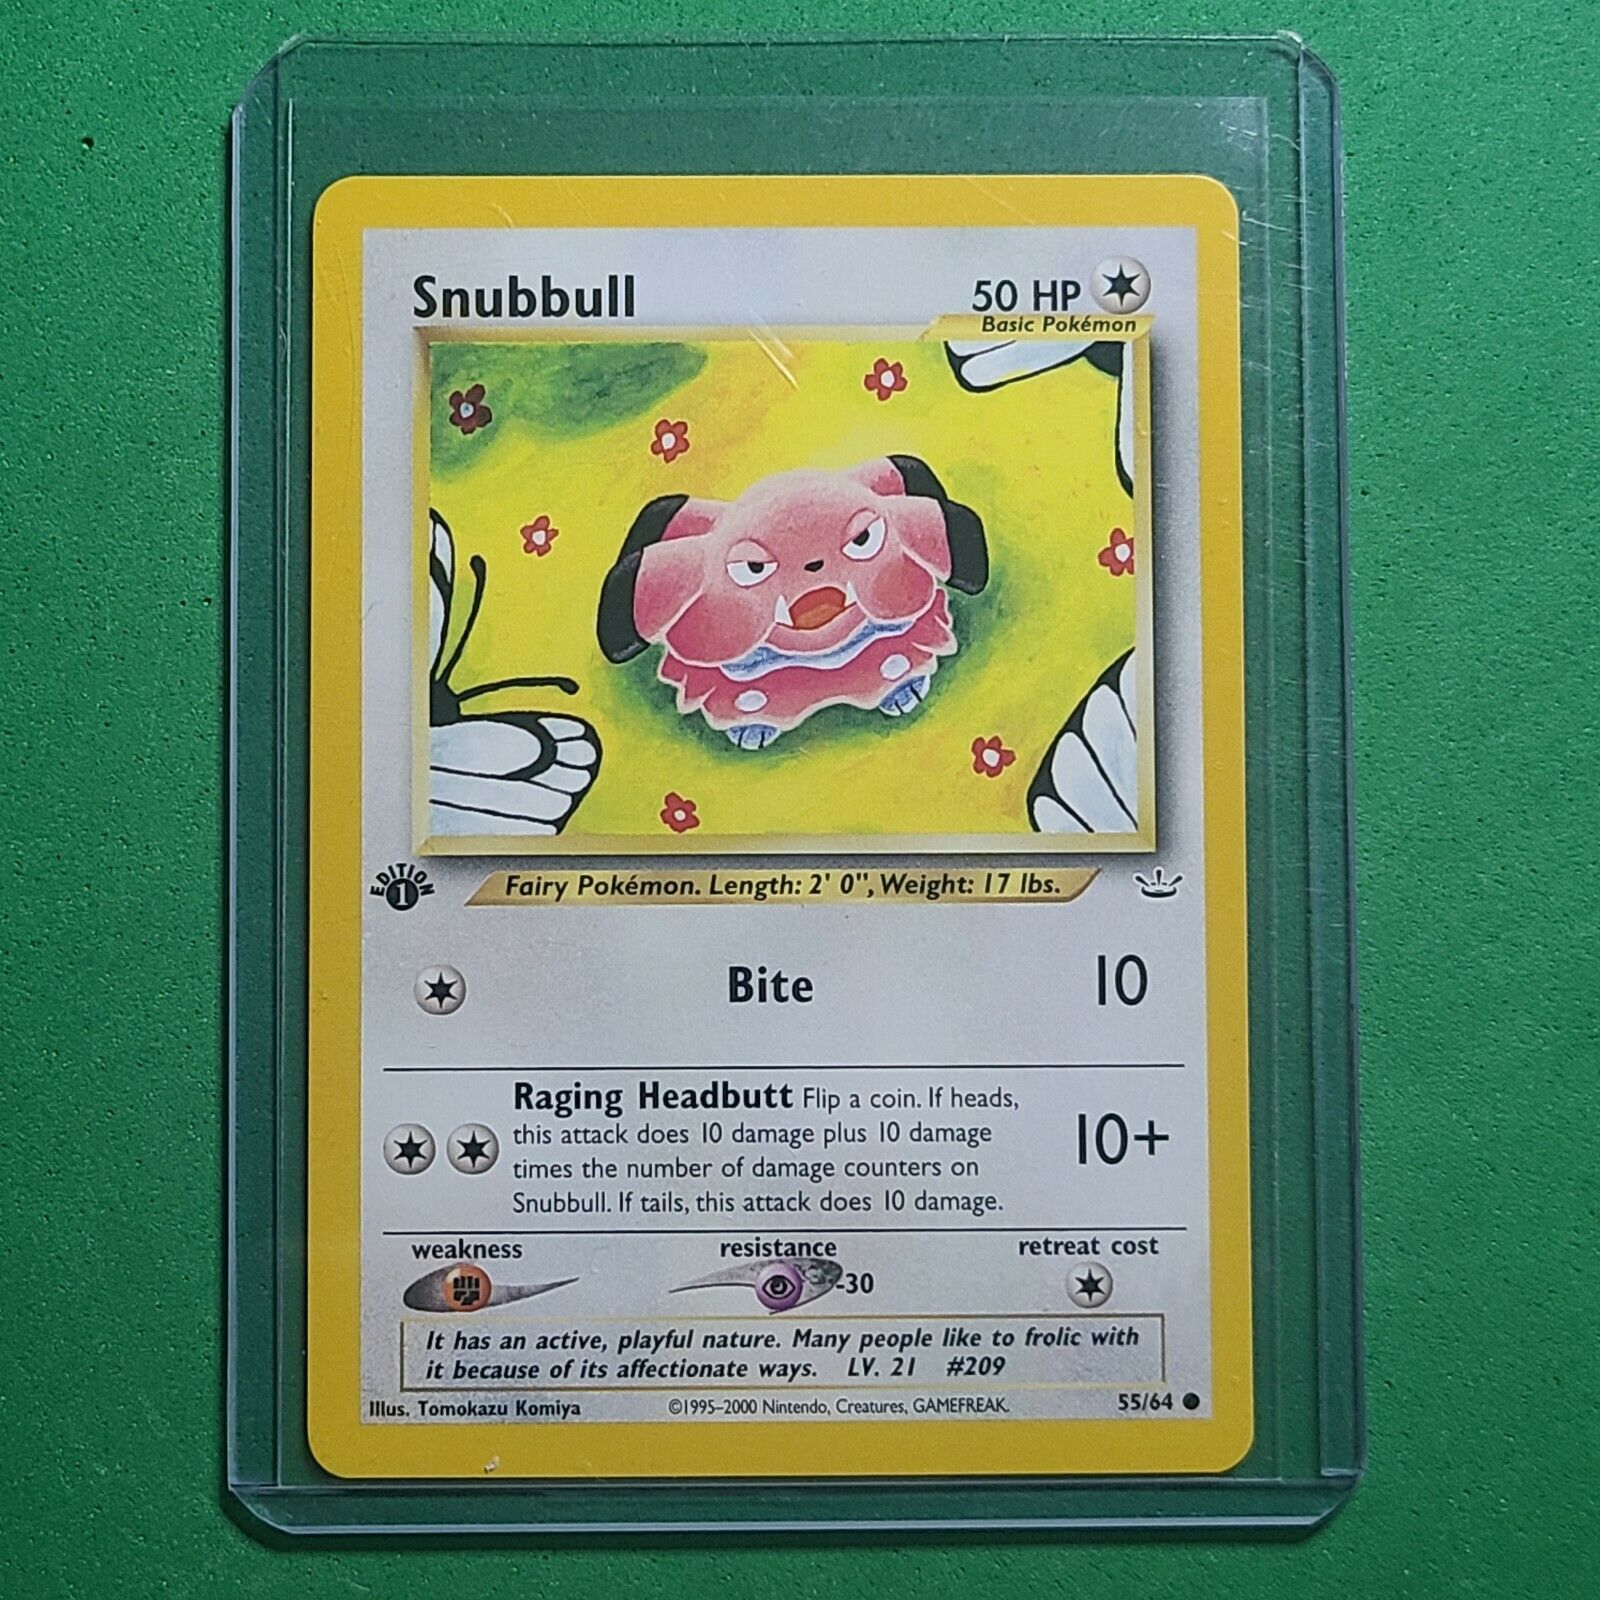 NM/Mint 1st Edition Snubbull 55/64 Neo Revelation Pokemon Card WOTC - Image 3